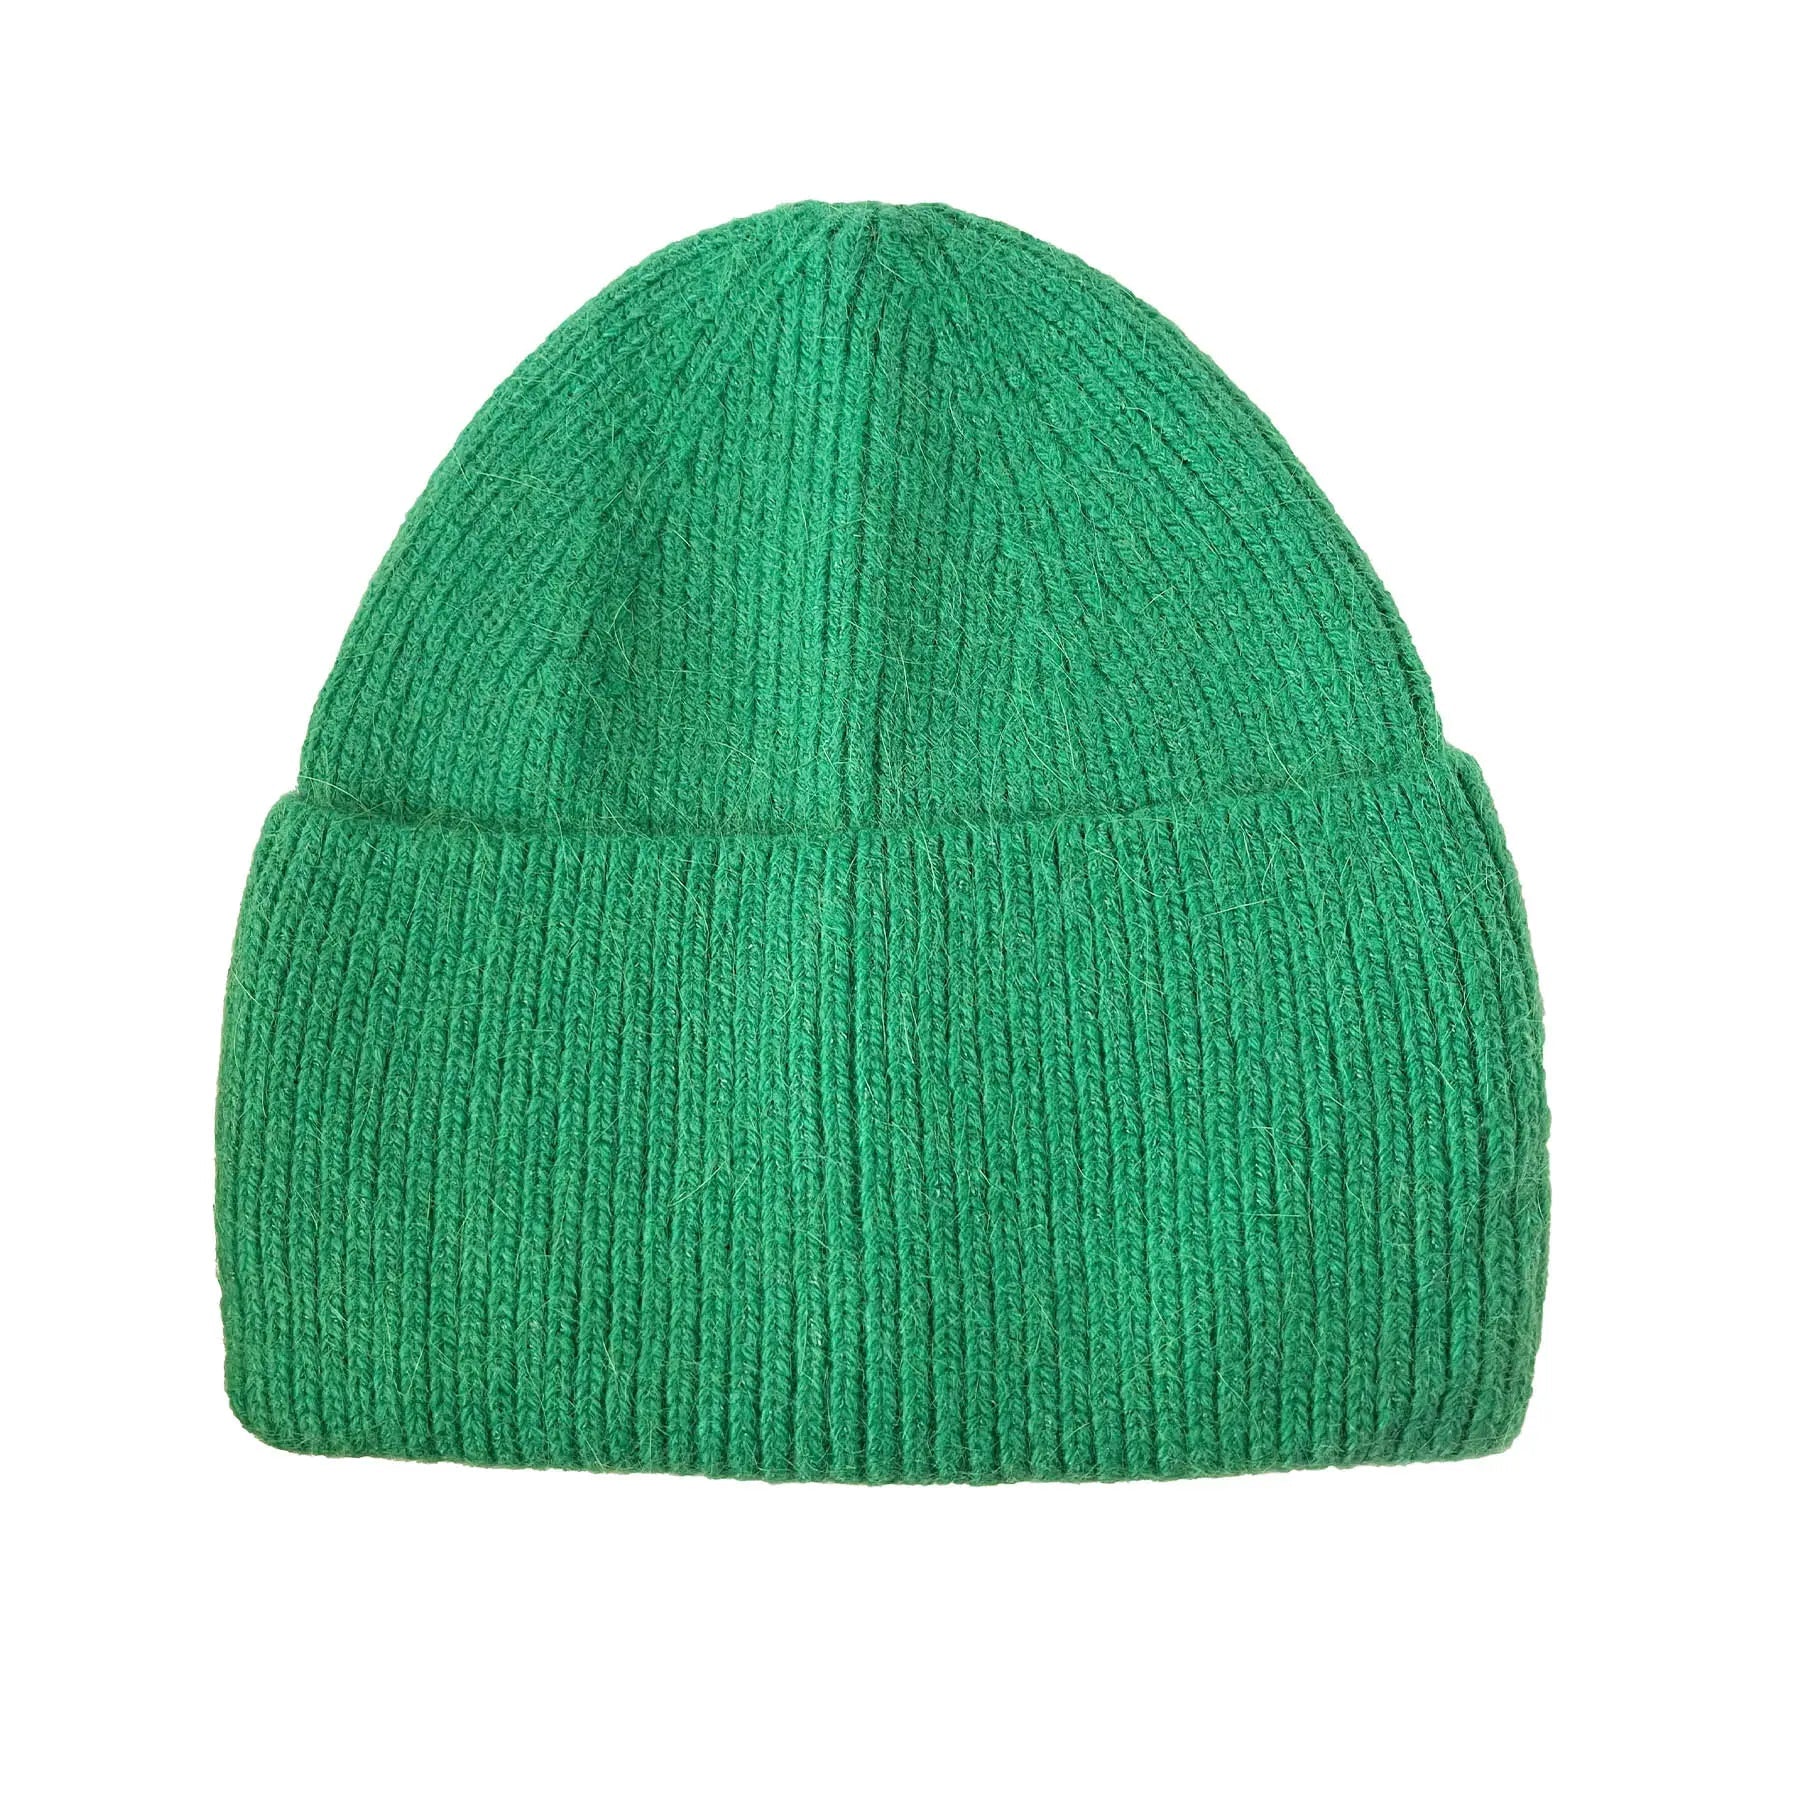 Grüne Mütze "Smaragd" KNOCKNOK Fashion